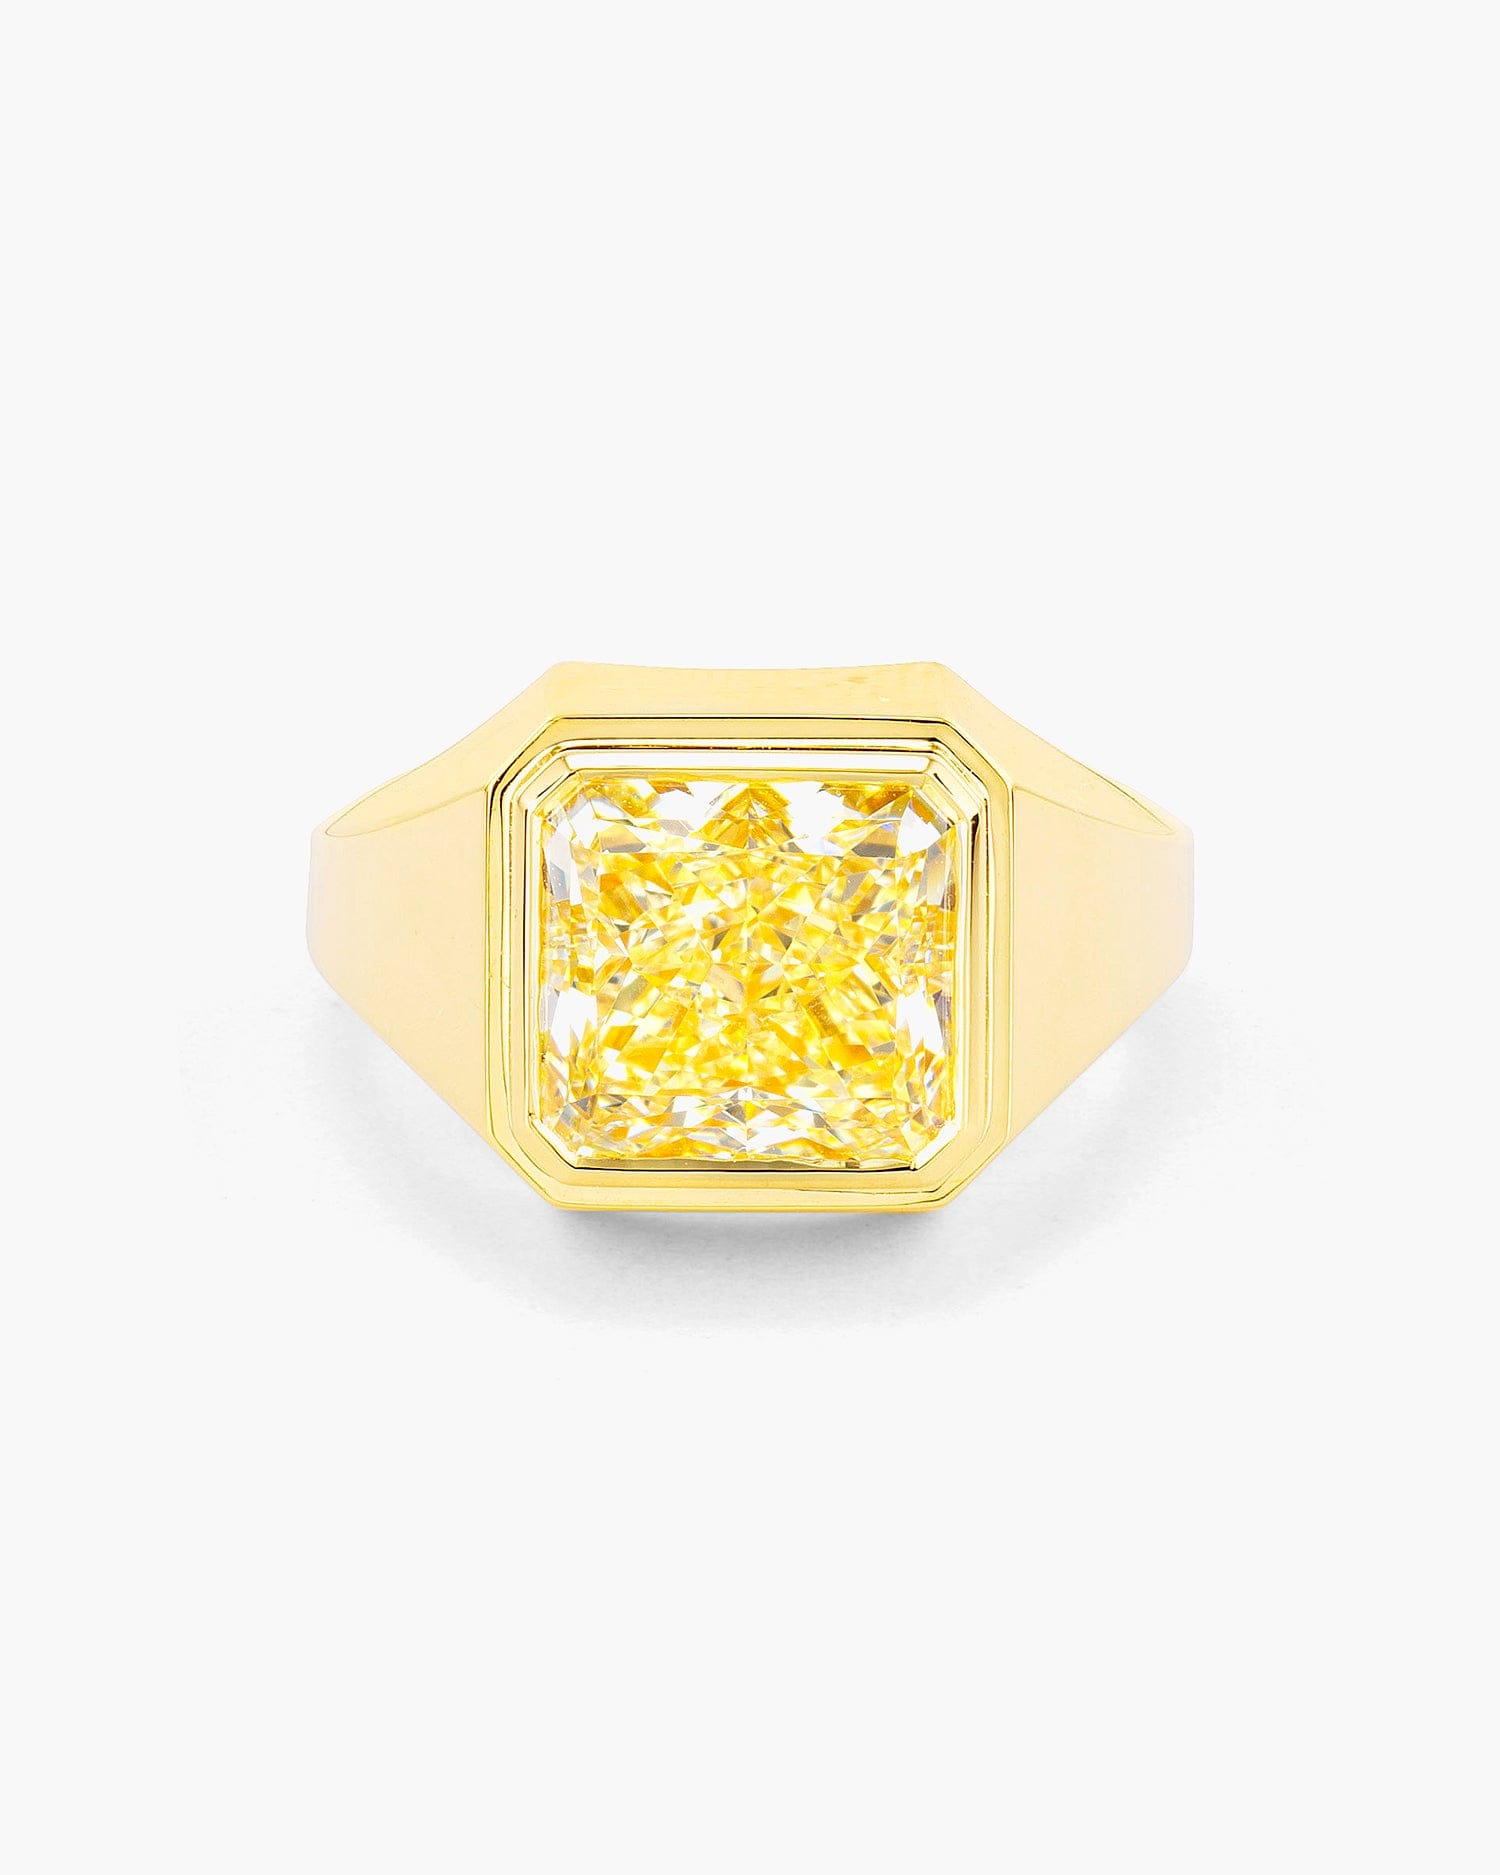 Radiant Shaped Yellow Diamond Bezel Set Mens Ring